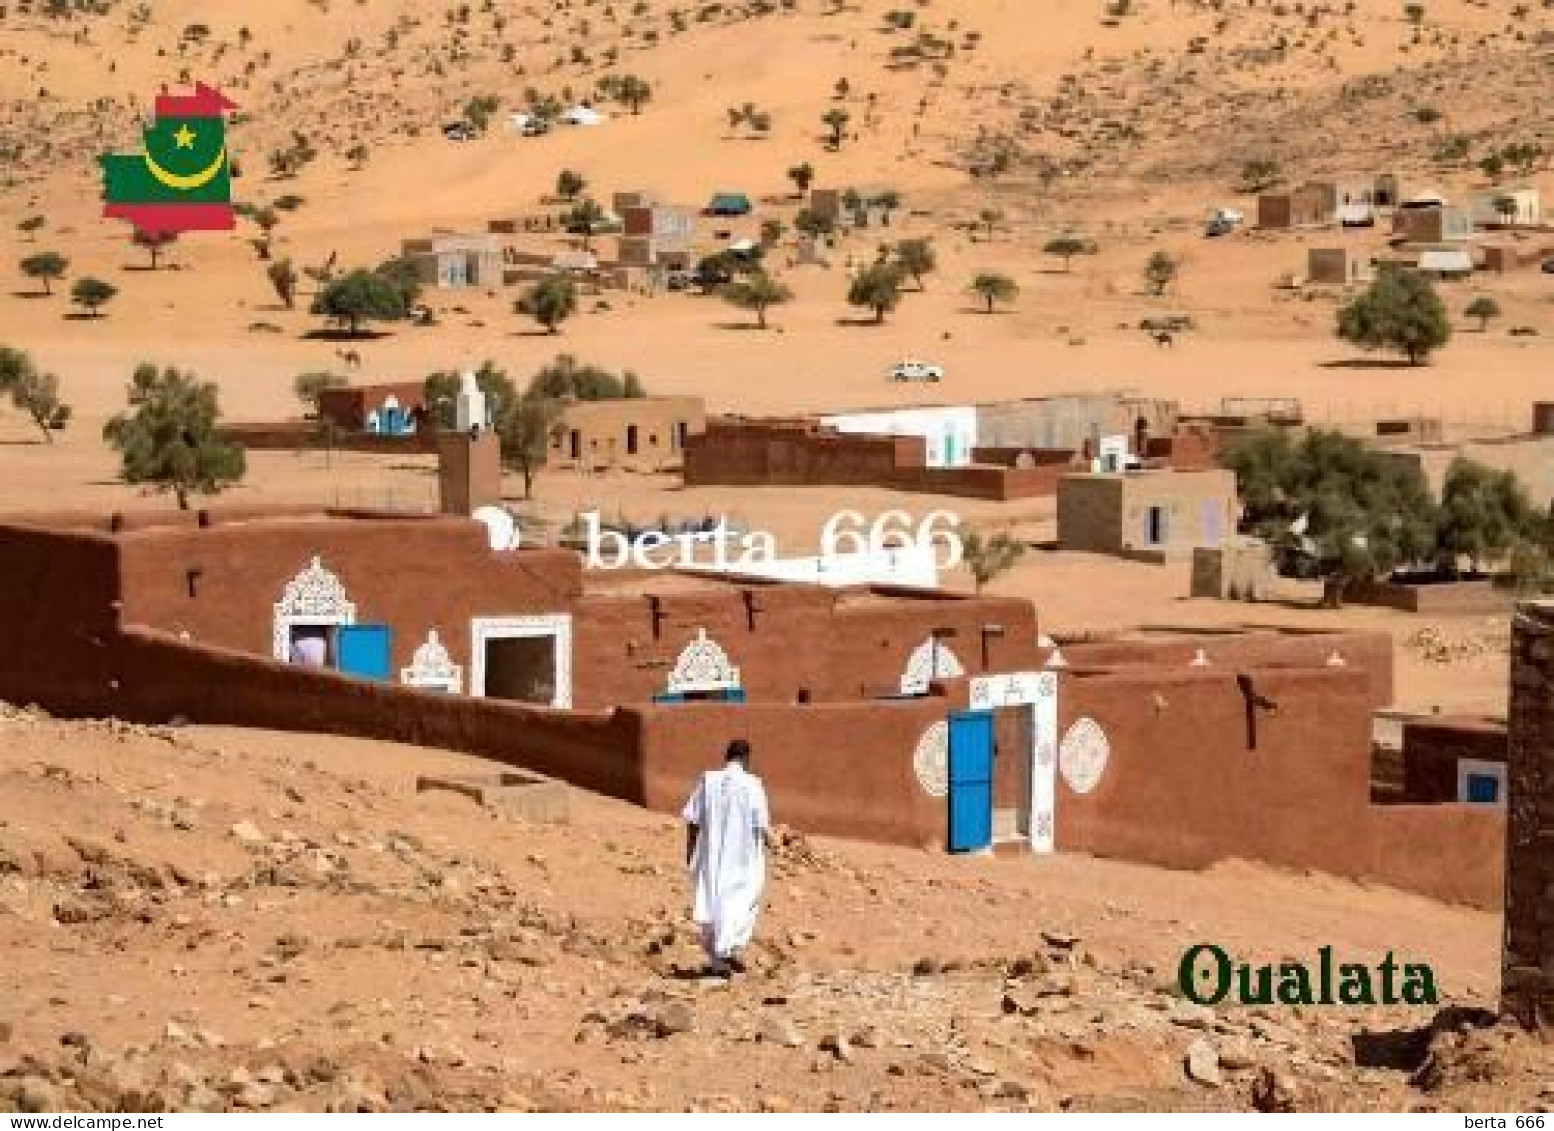 Mauritania Oualata UNESCO New Postcard - Mauritanie